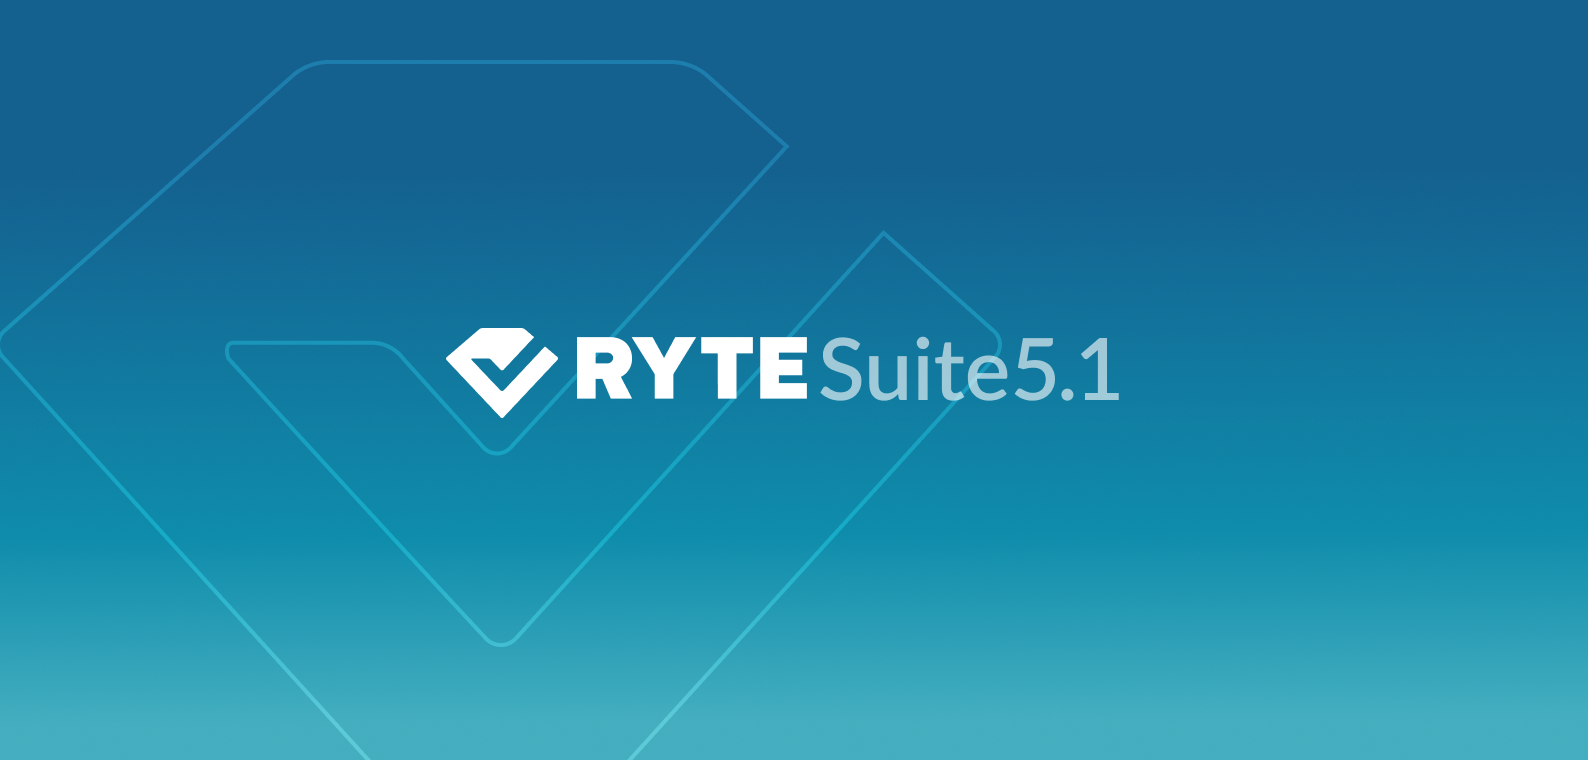 Ryte Suite 5.1 Header Image